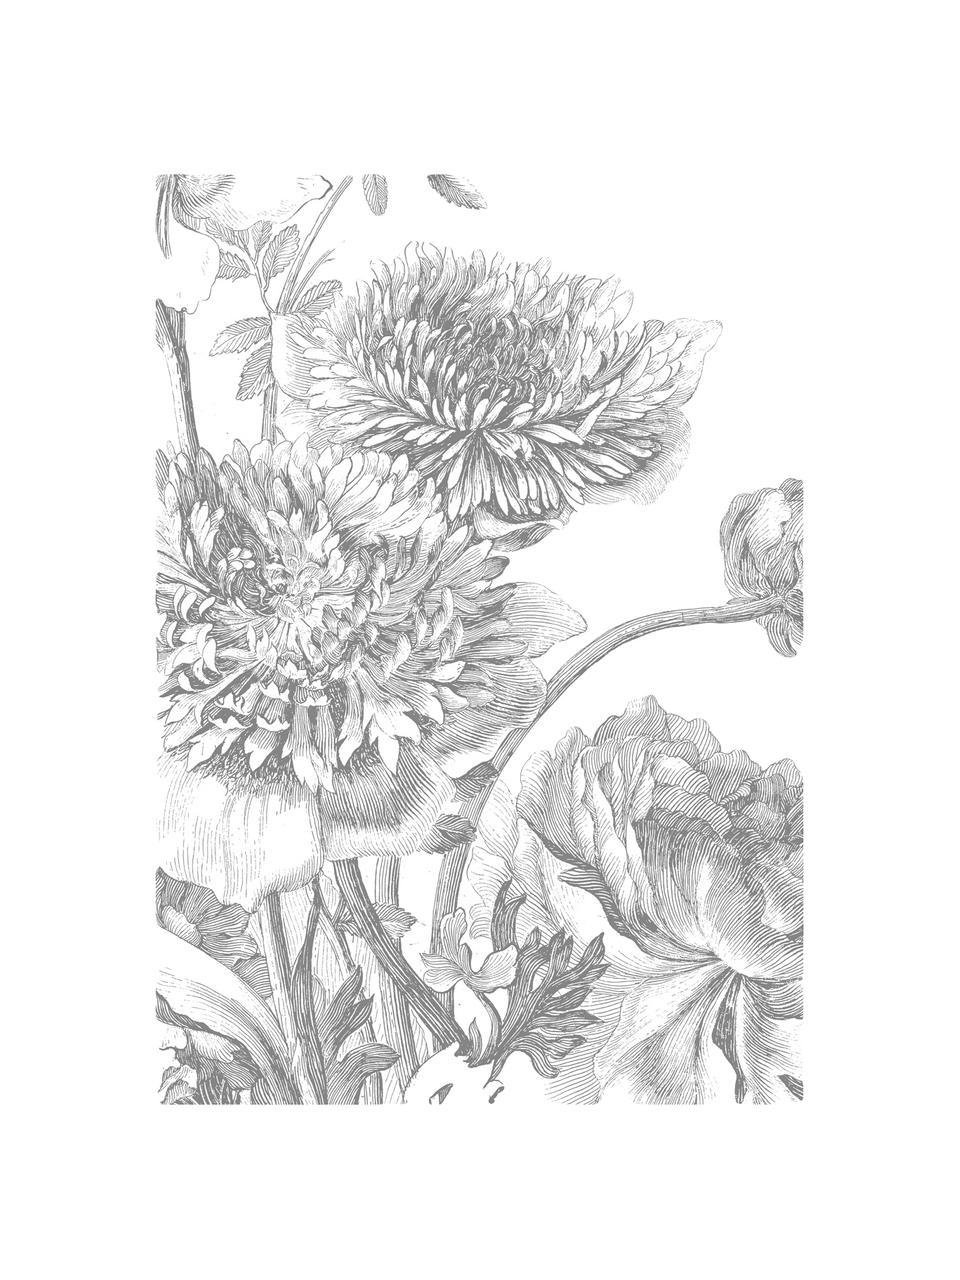 Papel pintado Engraved Flowers, Tejido no tejido, ecológica y biodegradable, Gris, blanco, An 389 x Al 280 cm